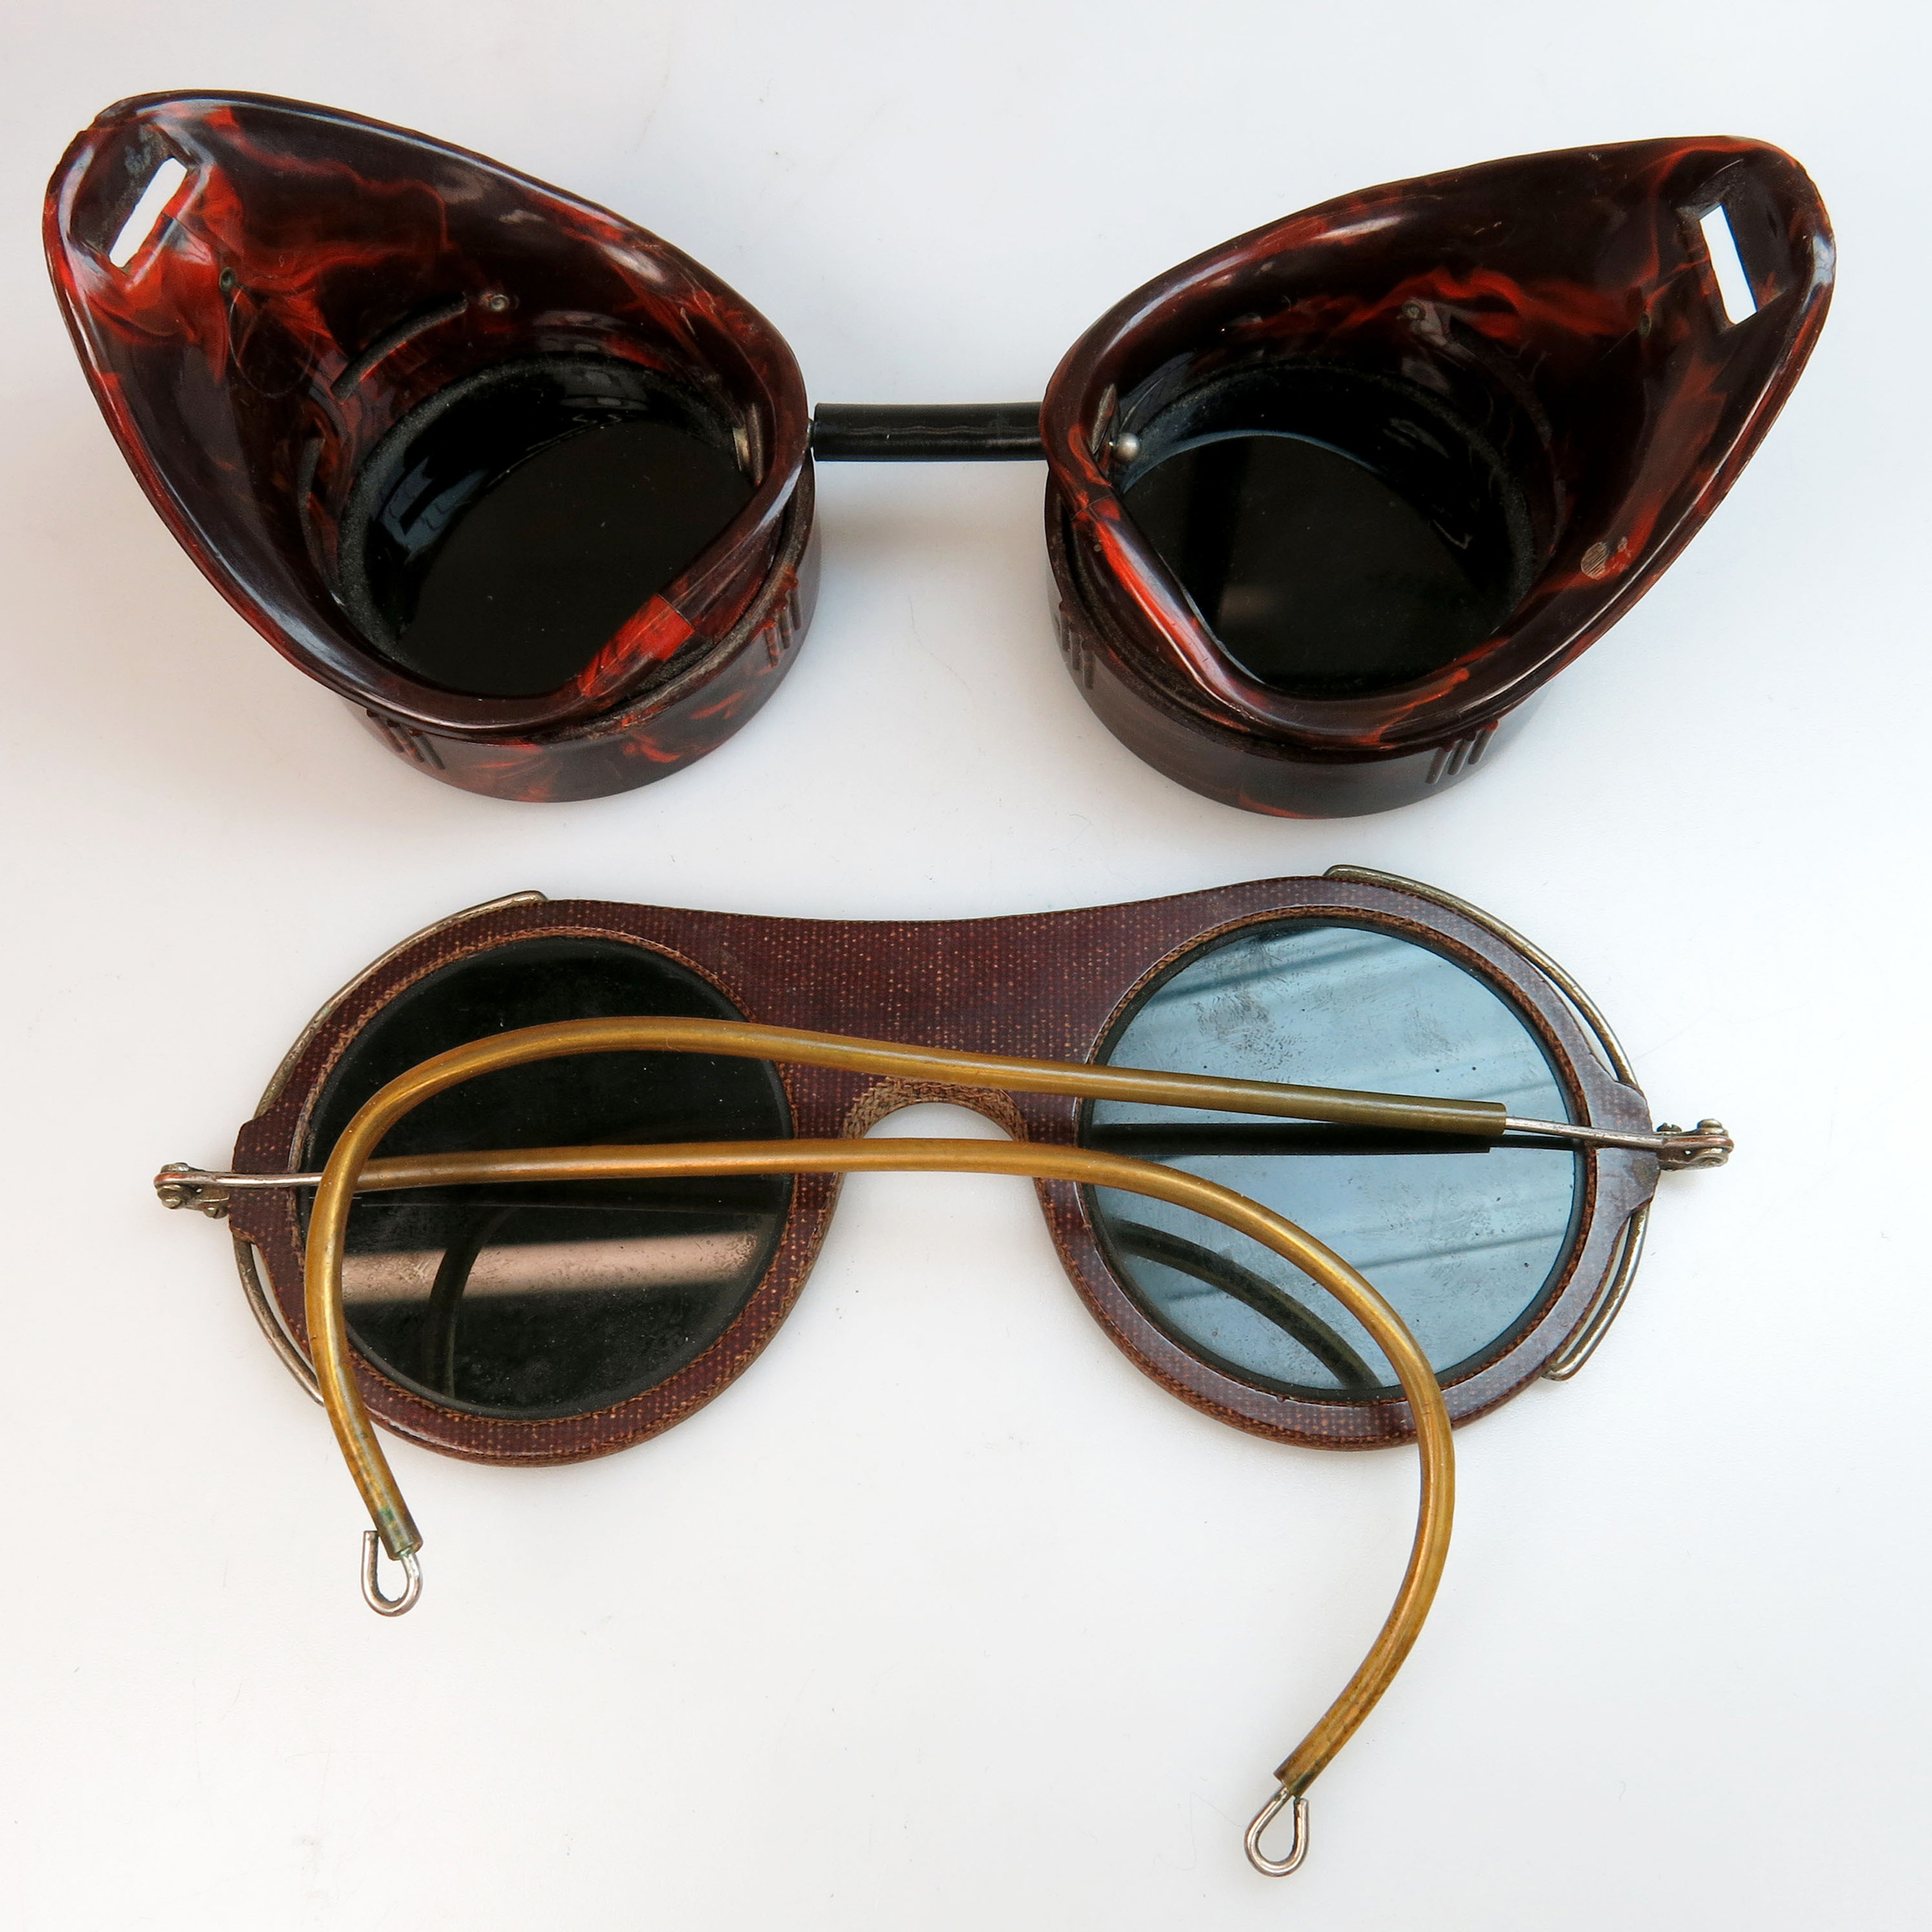 2 Pairs Of Vintage Welding Glasses